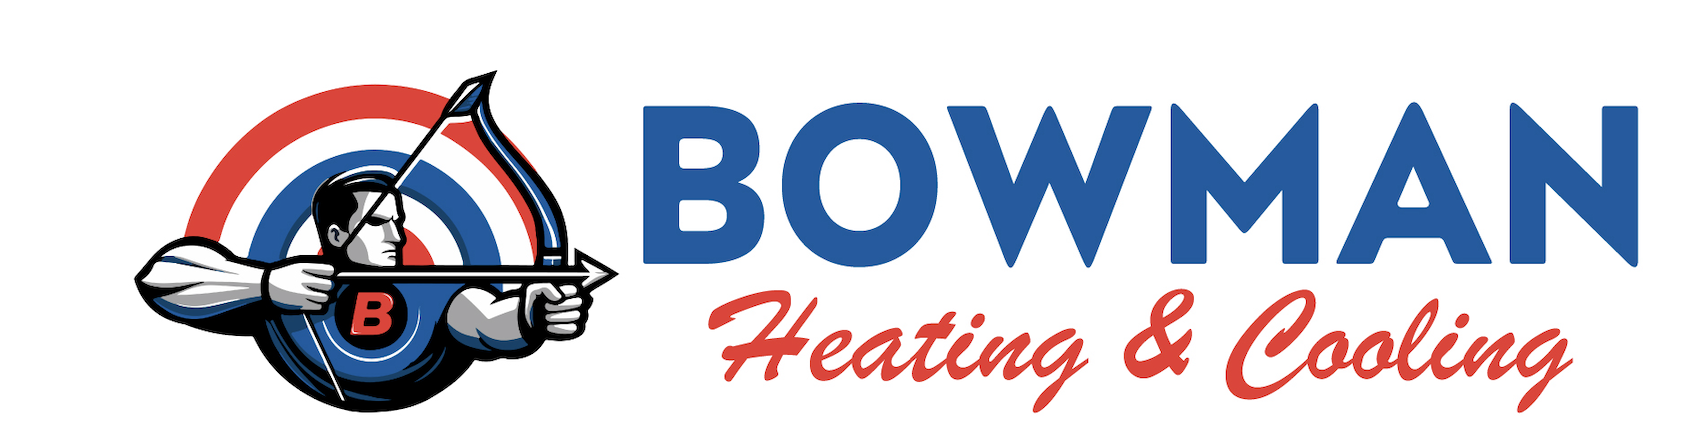 Bowman Heating & Cooling